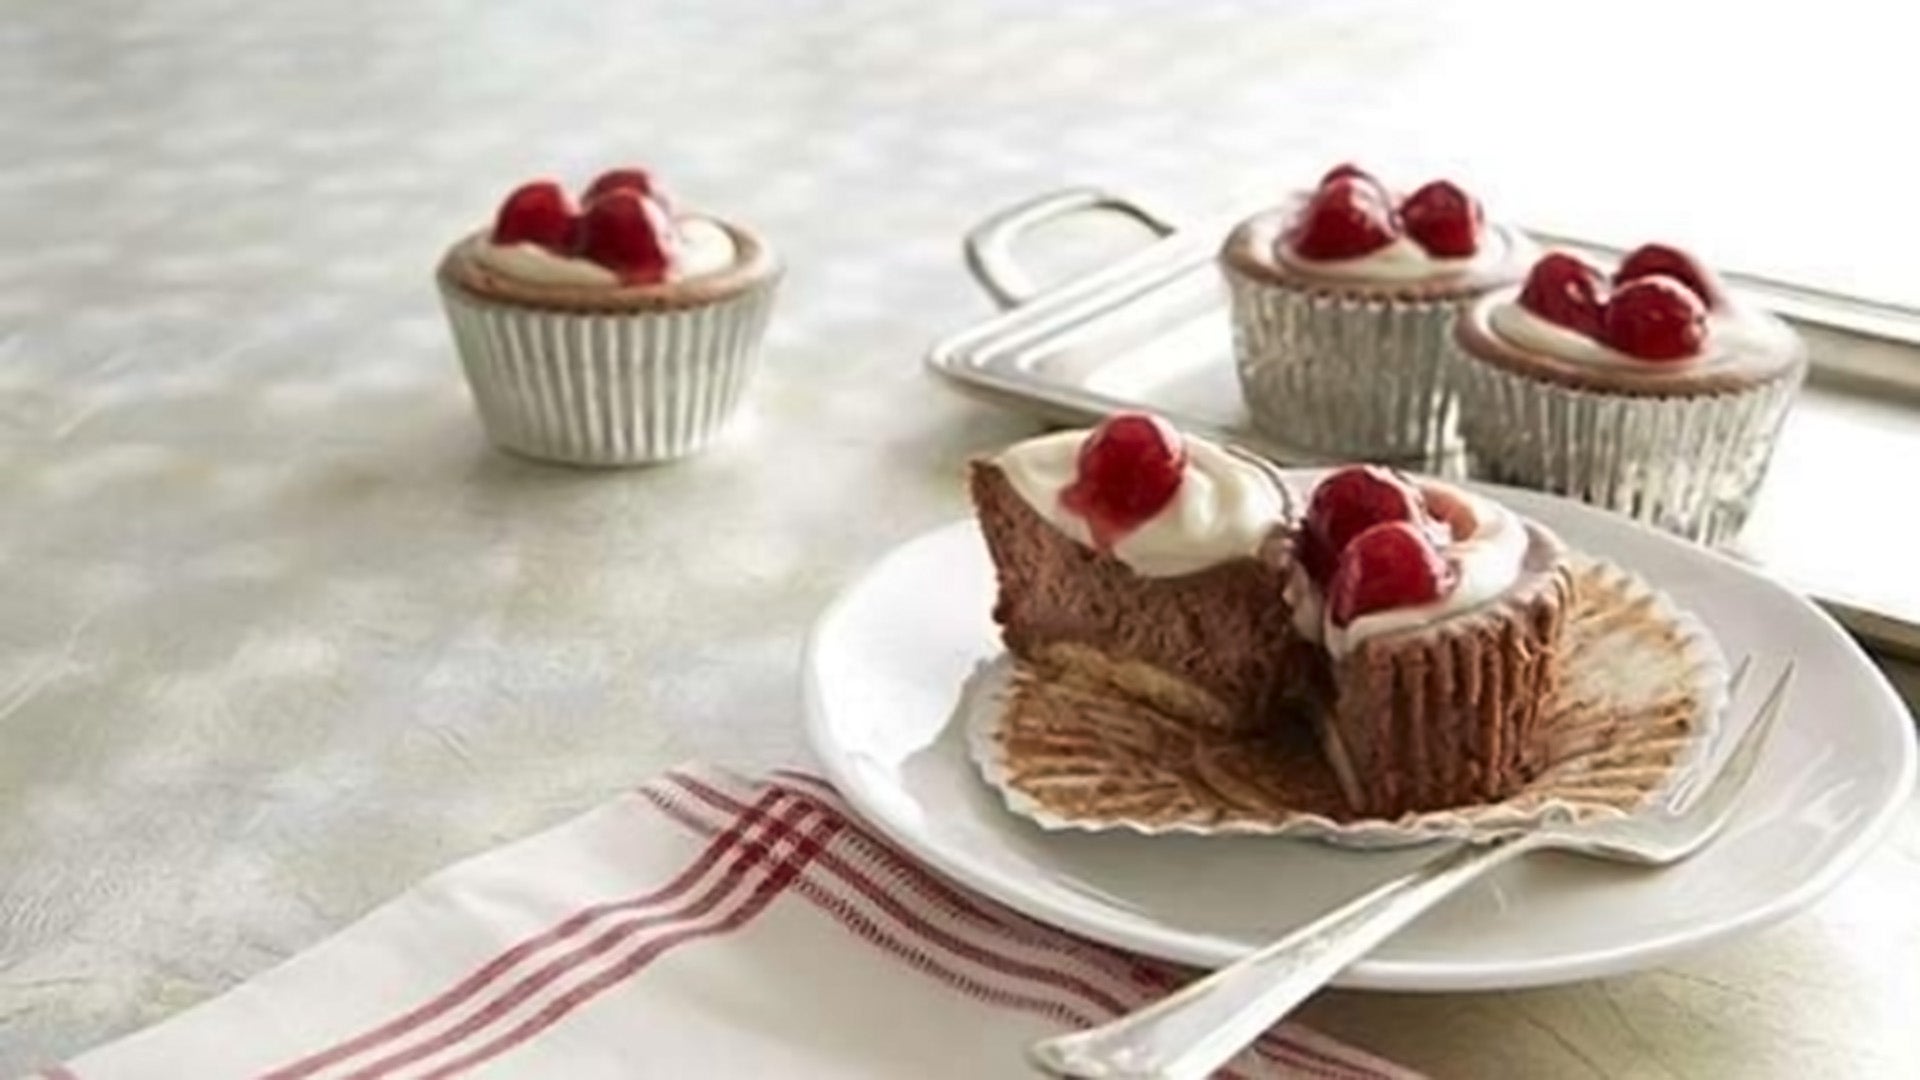 https://www.hersheyland.com/content/dam/hersheyland/en-us/recipes/recipe-images/500-black-forest-mini-cheesecakes.jpg